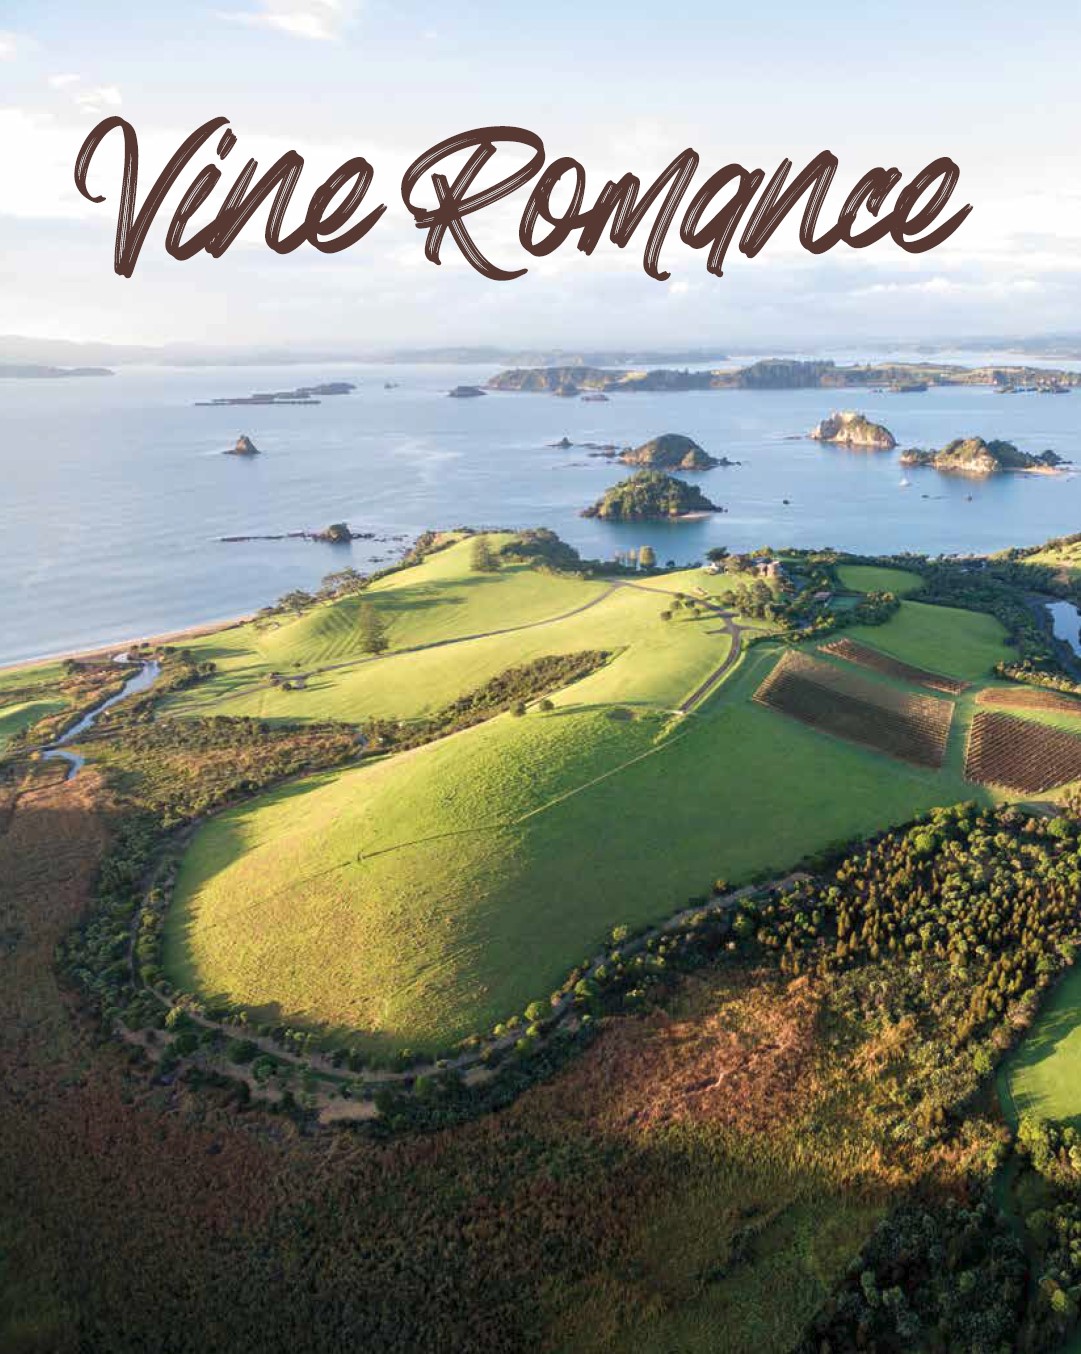 Vine Romance cover